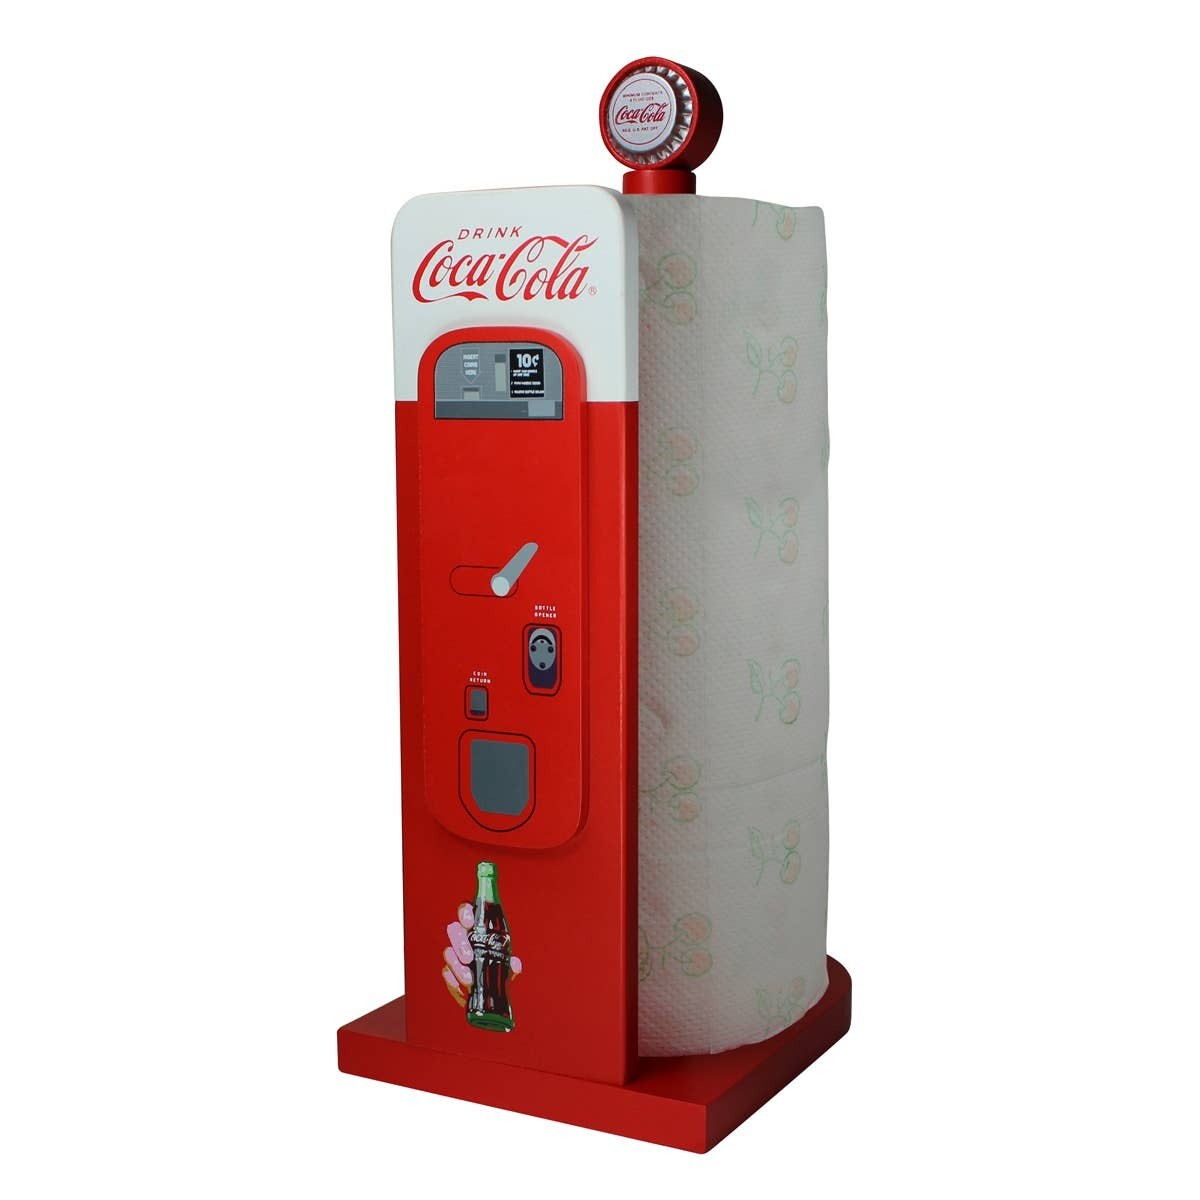 Coca-Cola Papierhandtuchhalter / Küchenrollenhalter Getränkeautomat, Holz